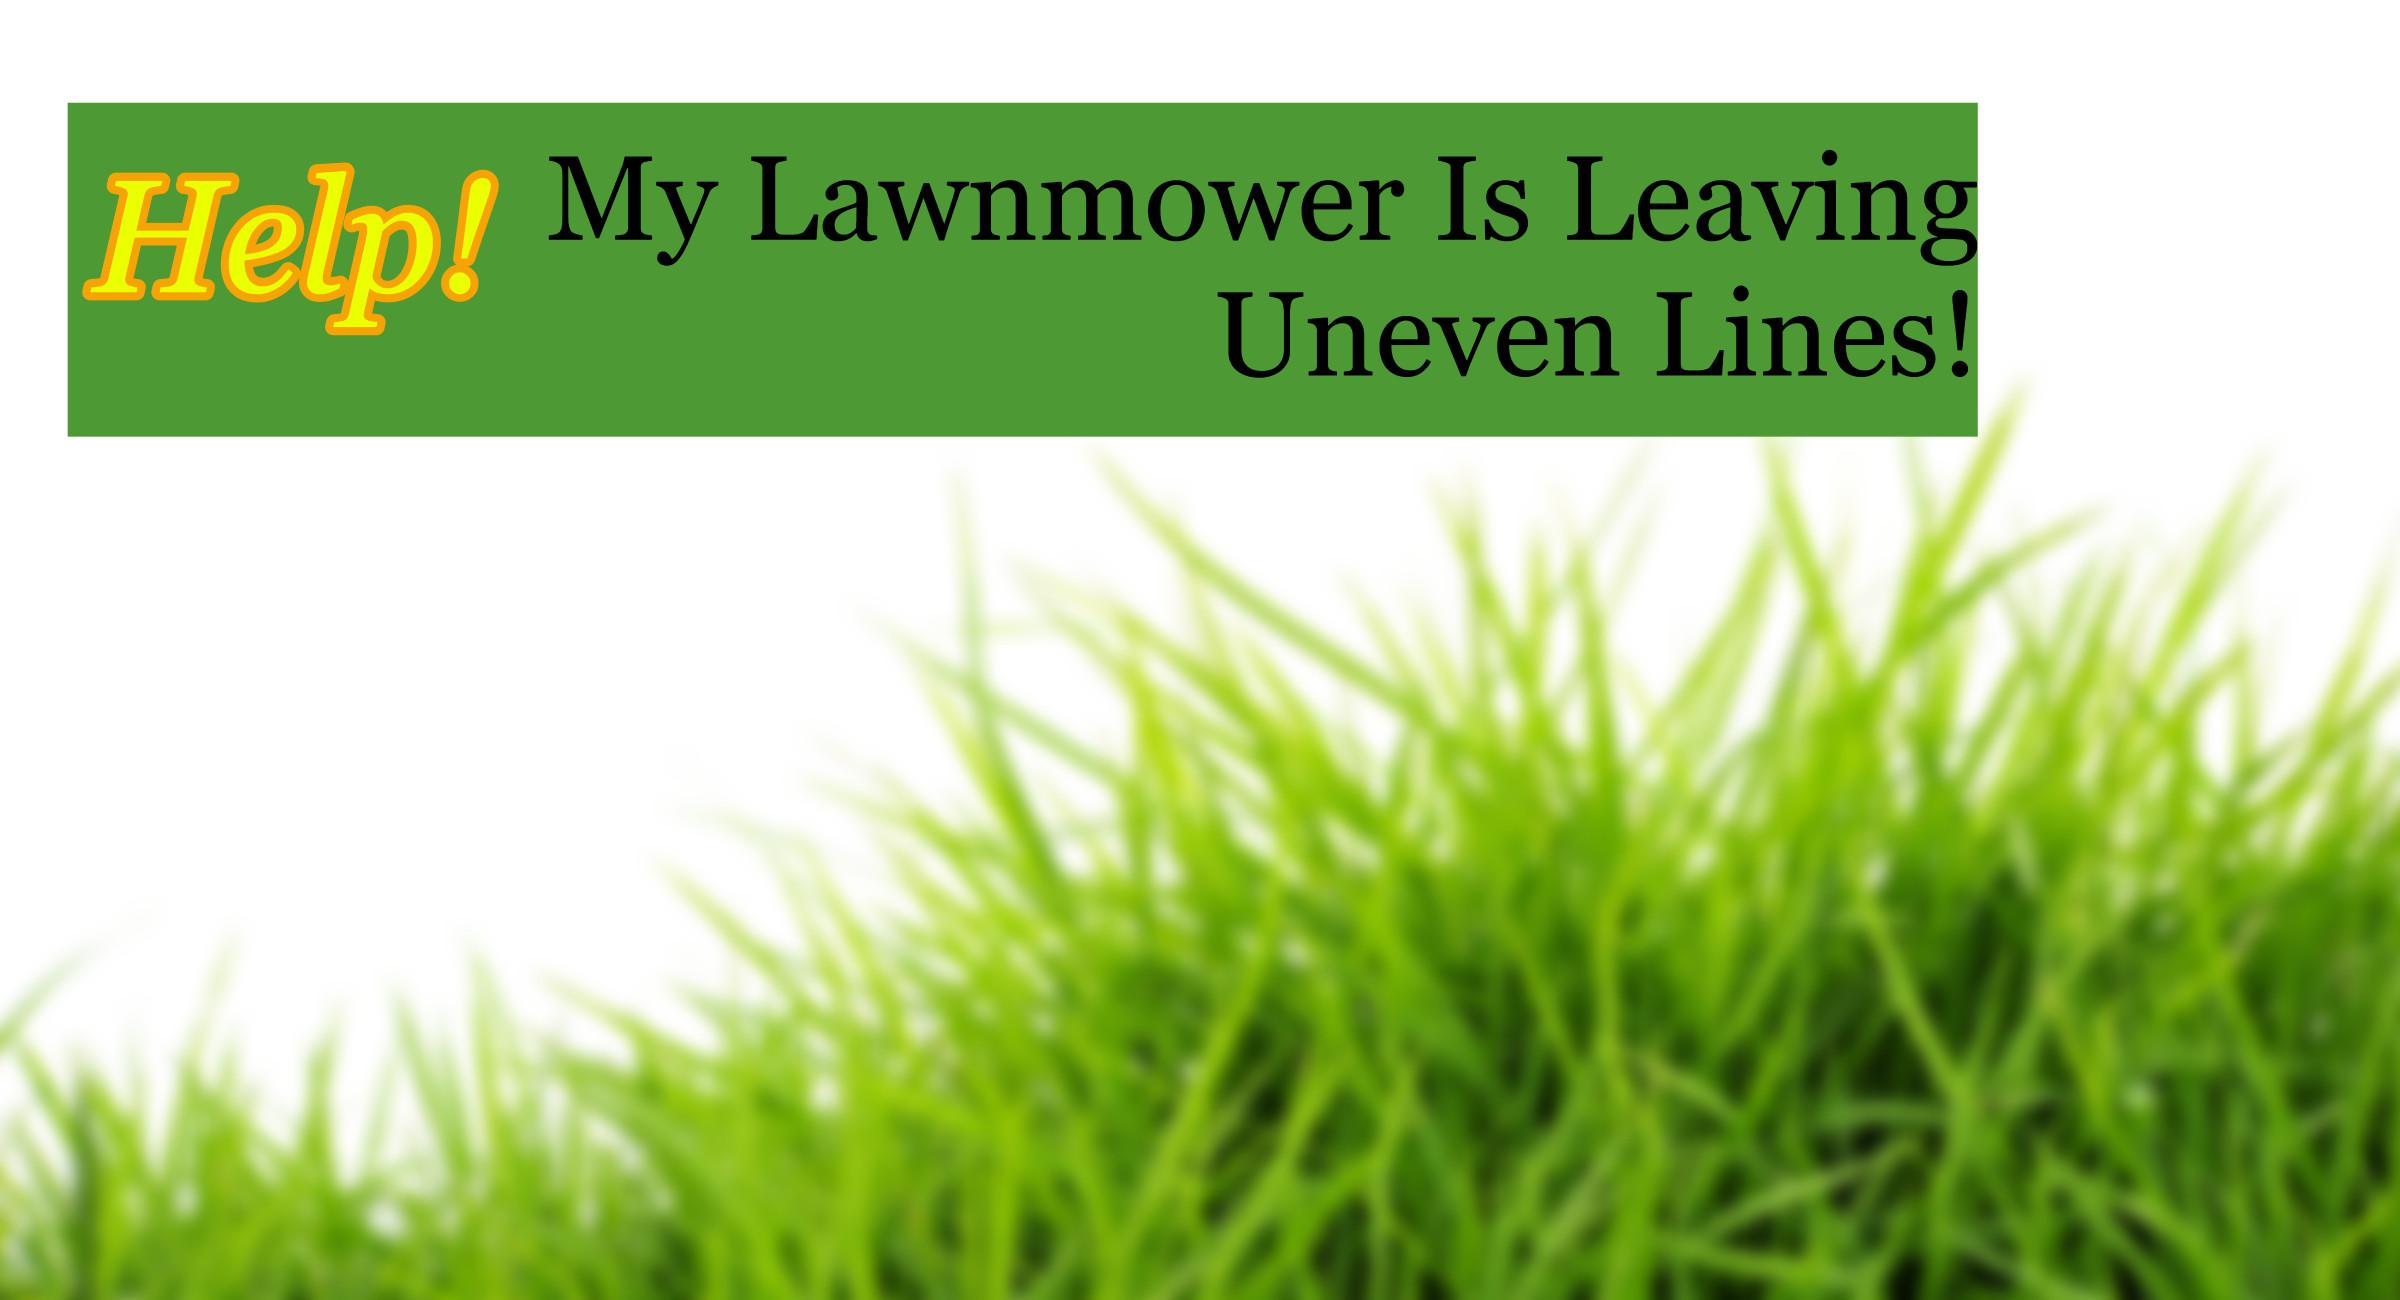 lawnmower leaving uneven lines in grass